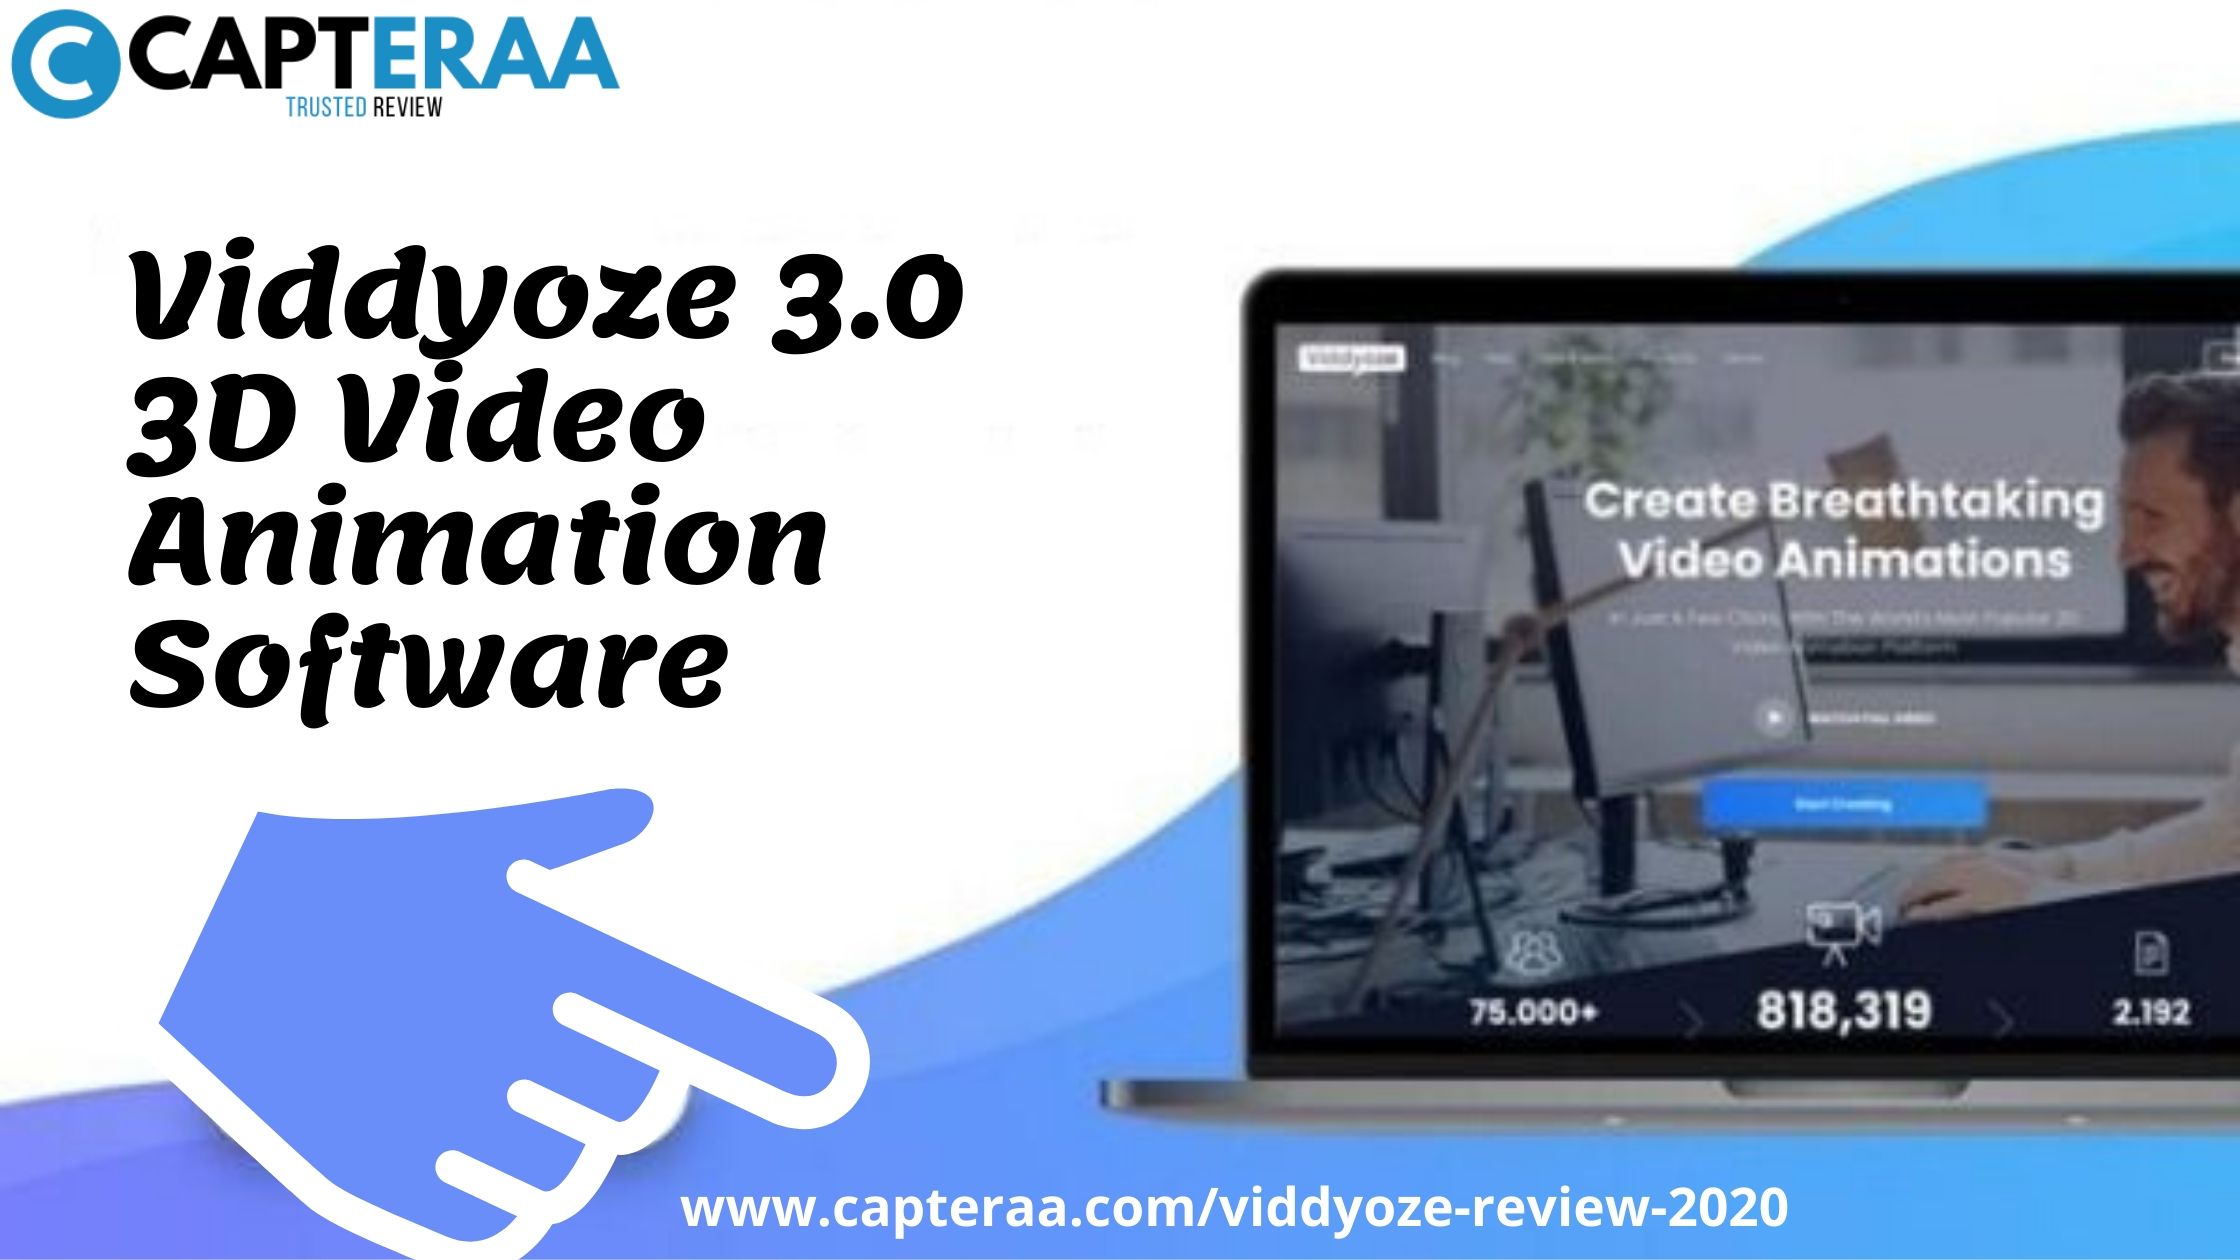 Download Viddyoze 3D Animation Software Full Version